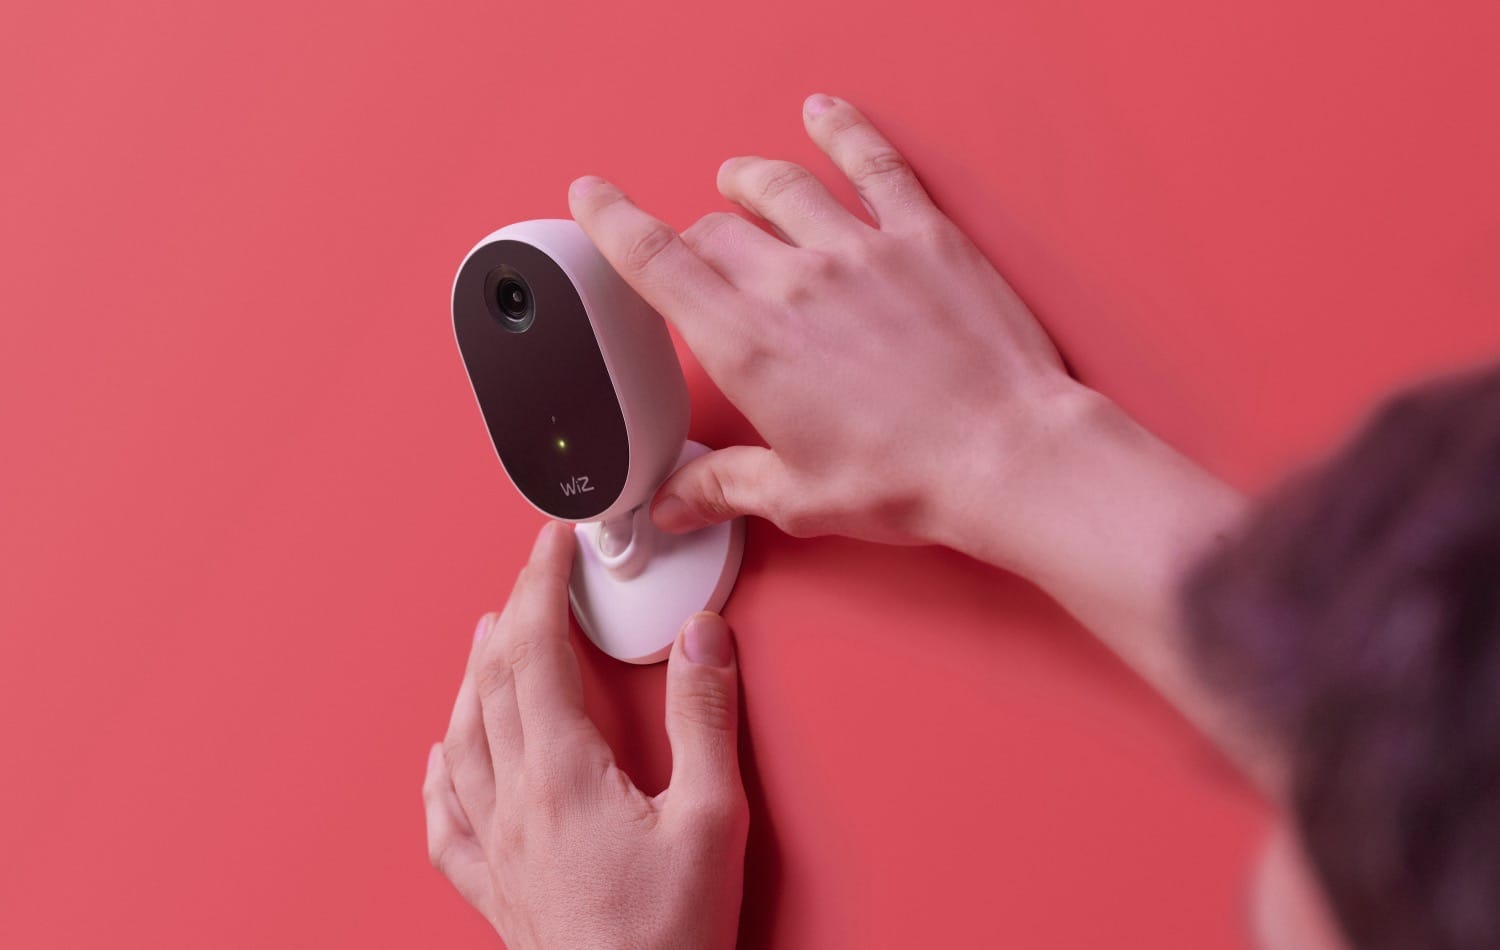 Hueblog: Philips Hue to unveil its own smart home camera